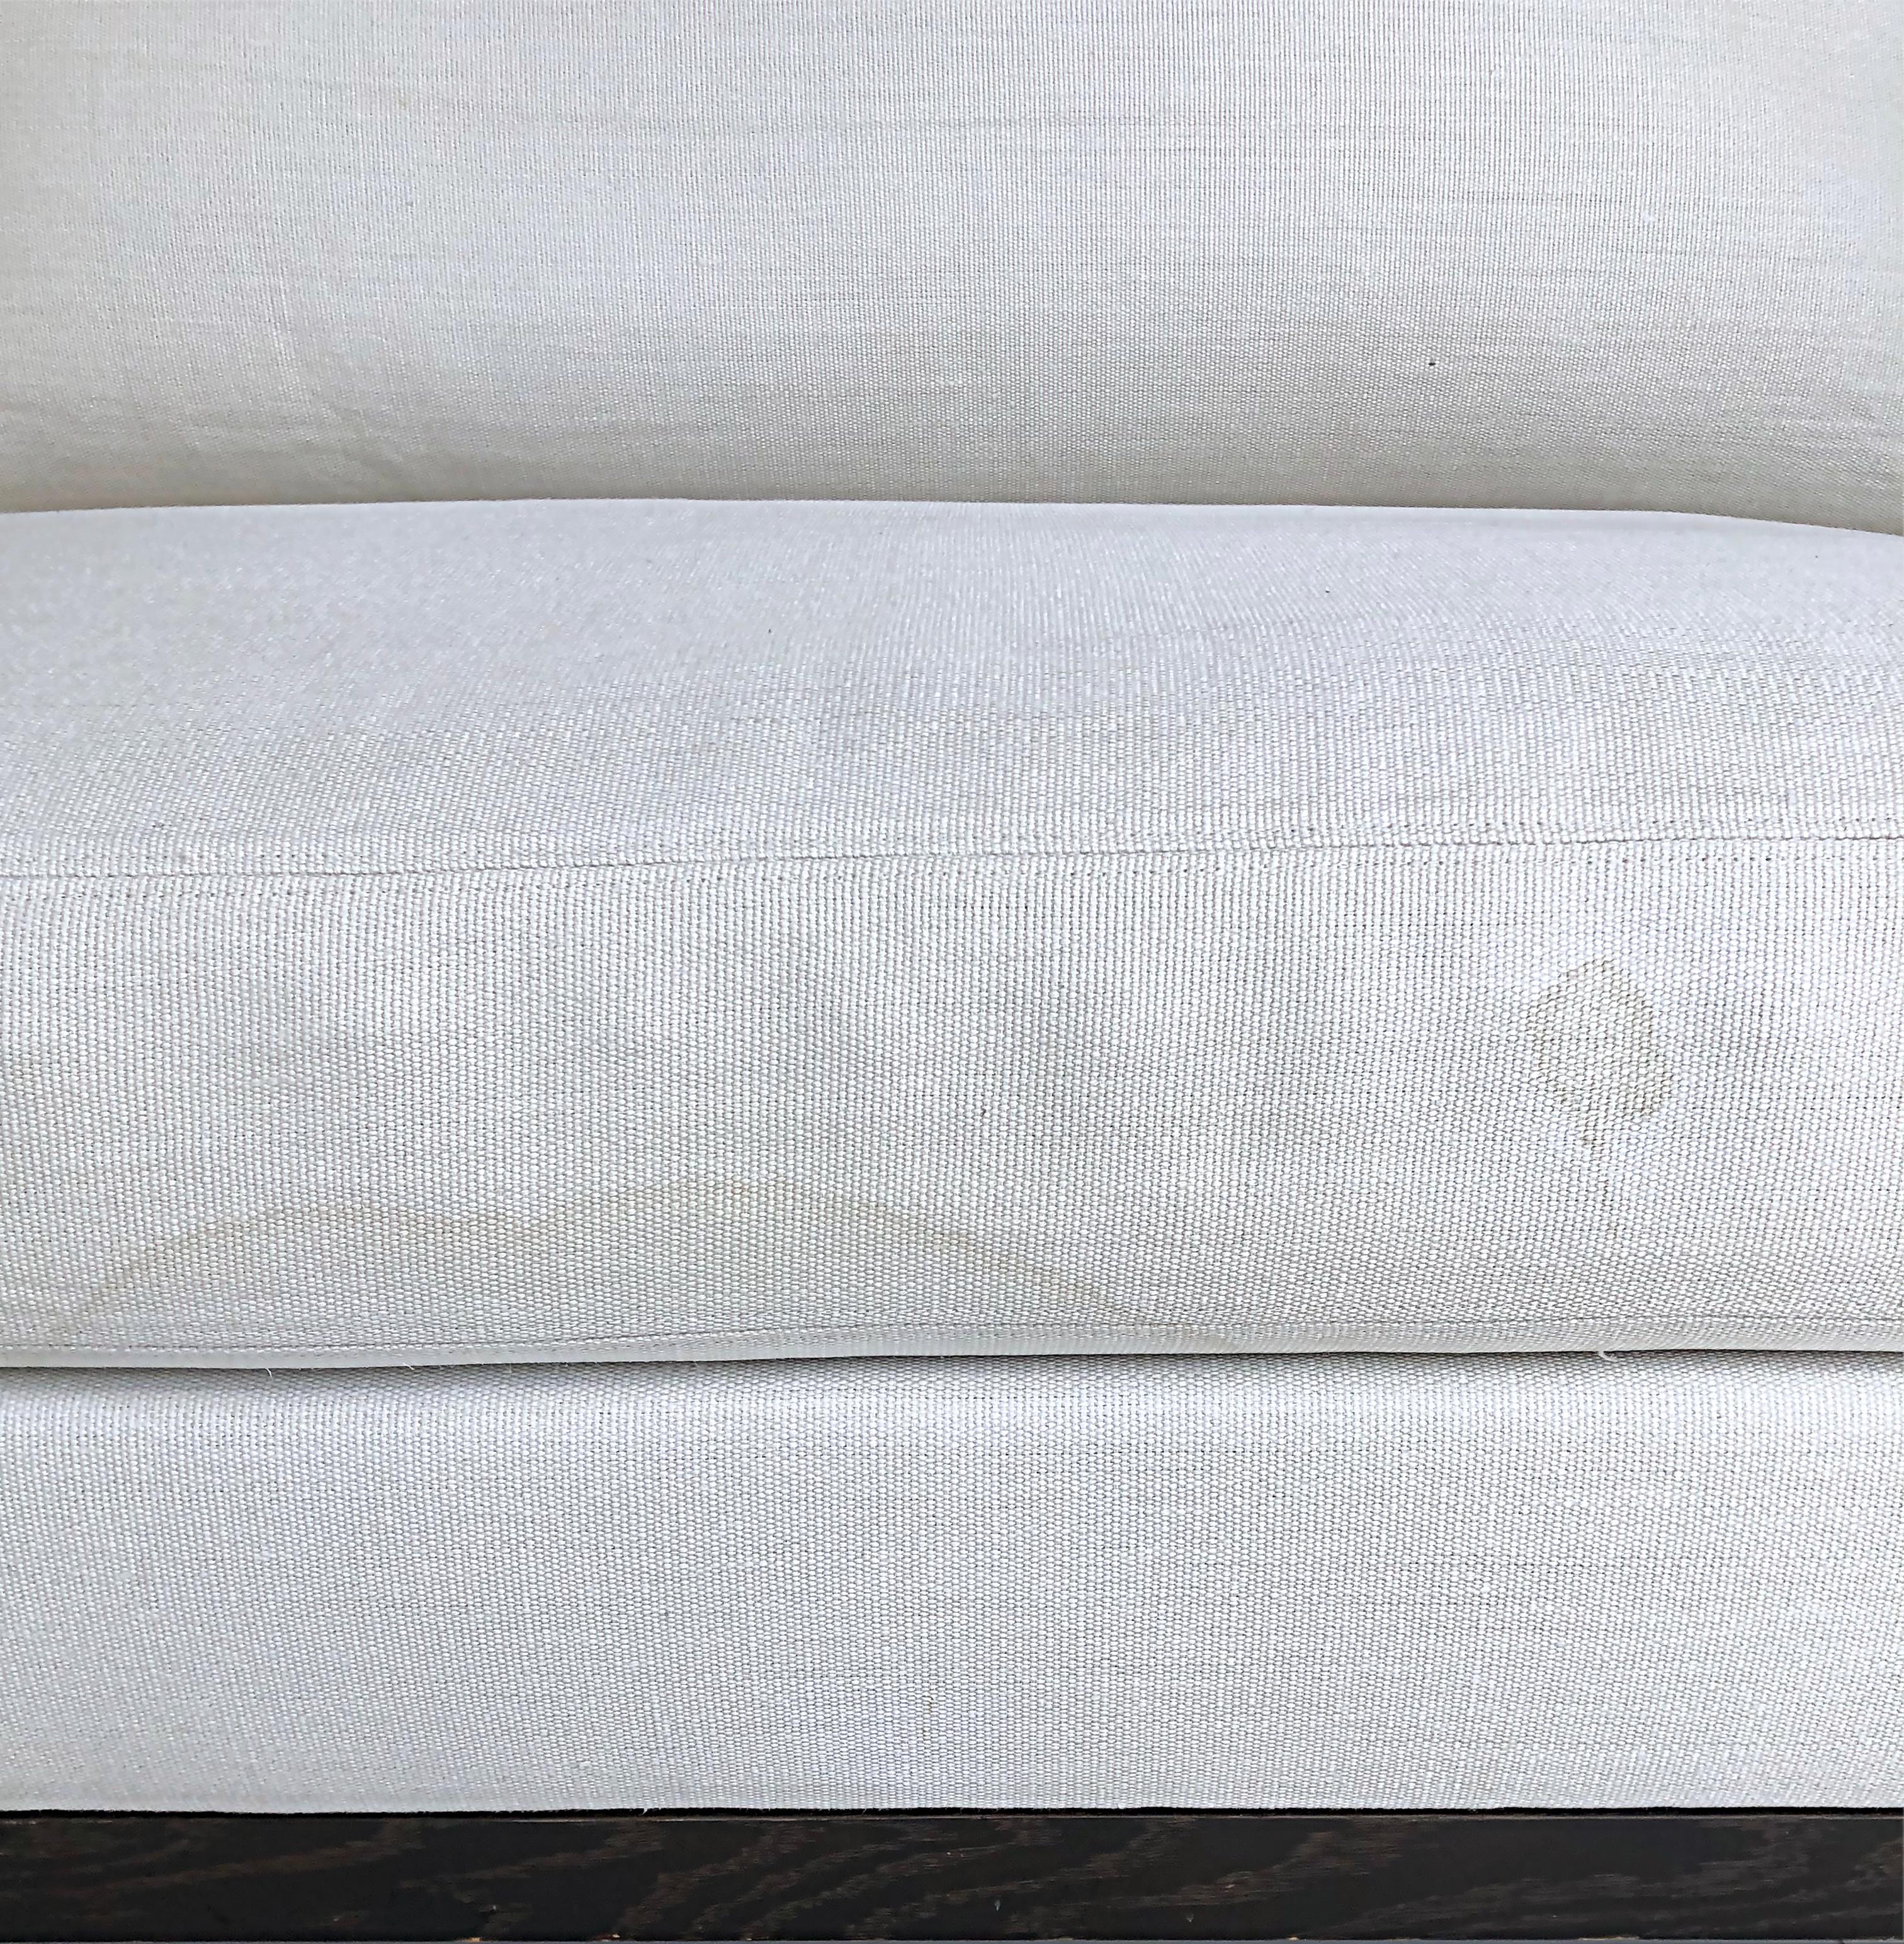 Christian Liaigre Beluga Sofa, Ebonized Wood w/Liaigre Belgian Linen Upholstery 1